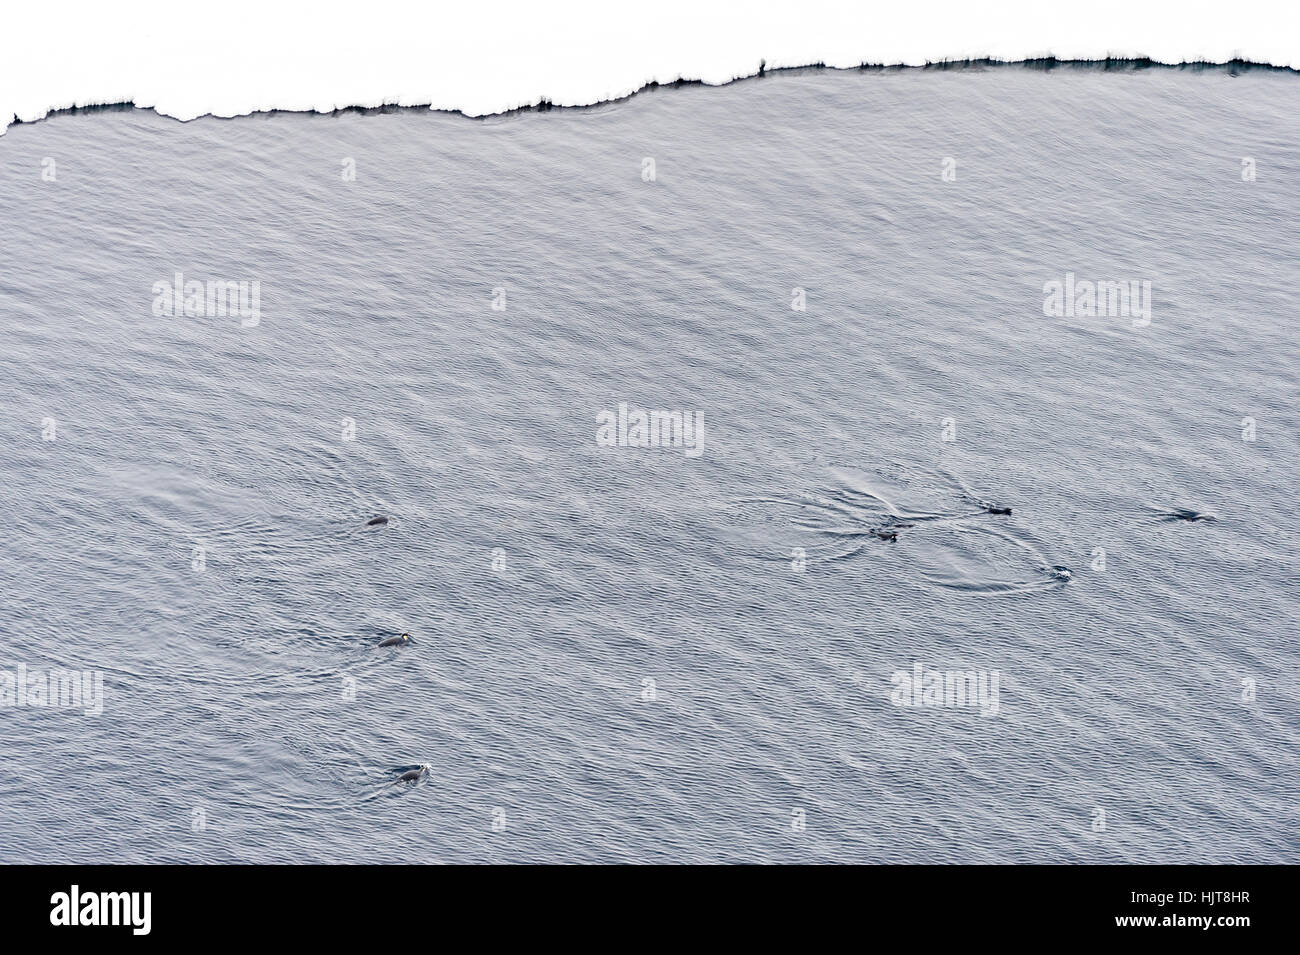 Emperor Penguins swimming in the ocean along the sea ice edge in Antarctica. Stock Photo